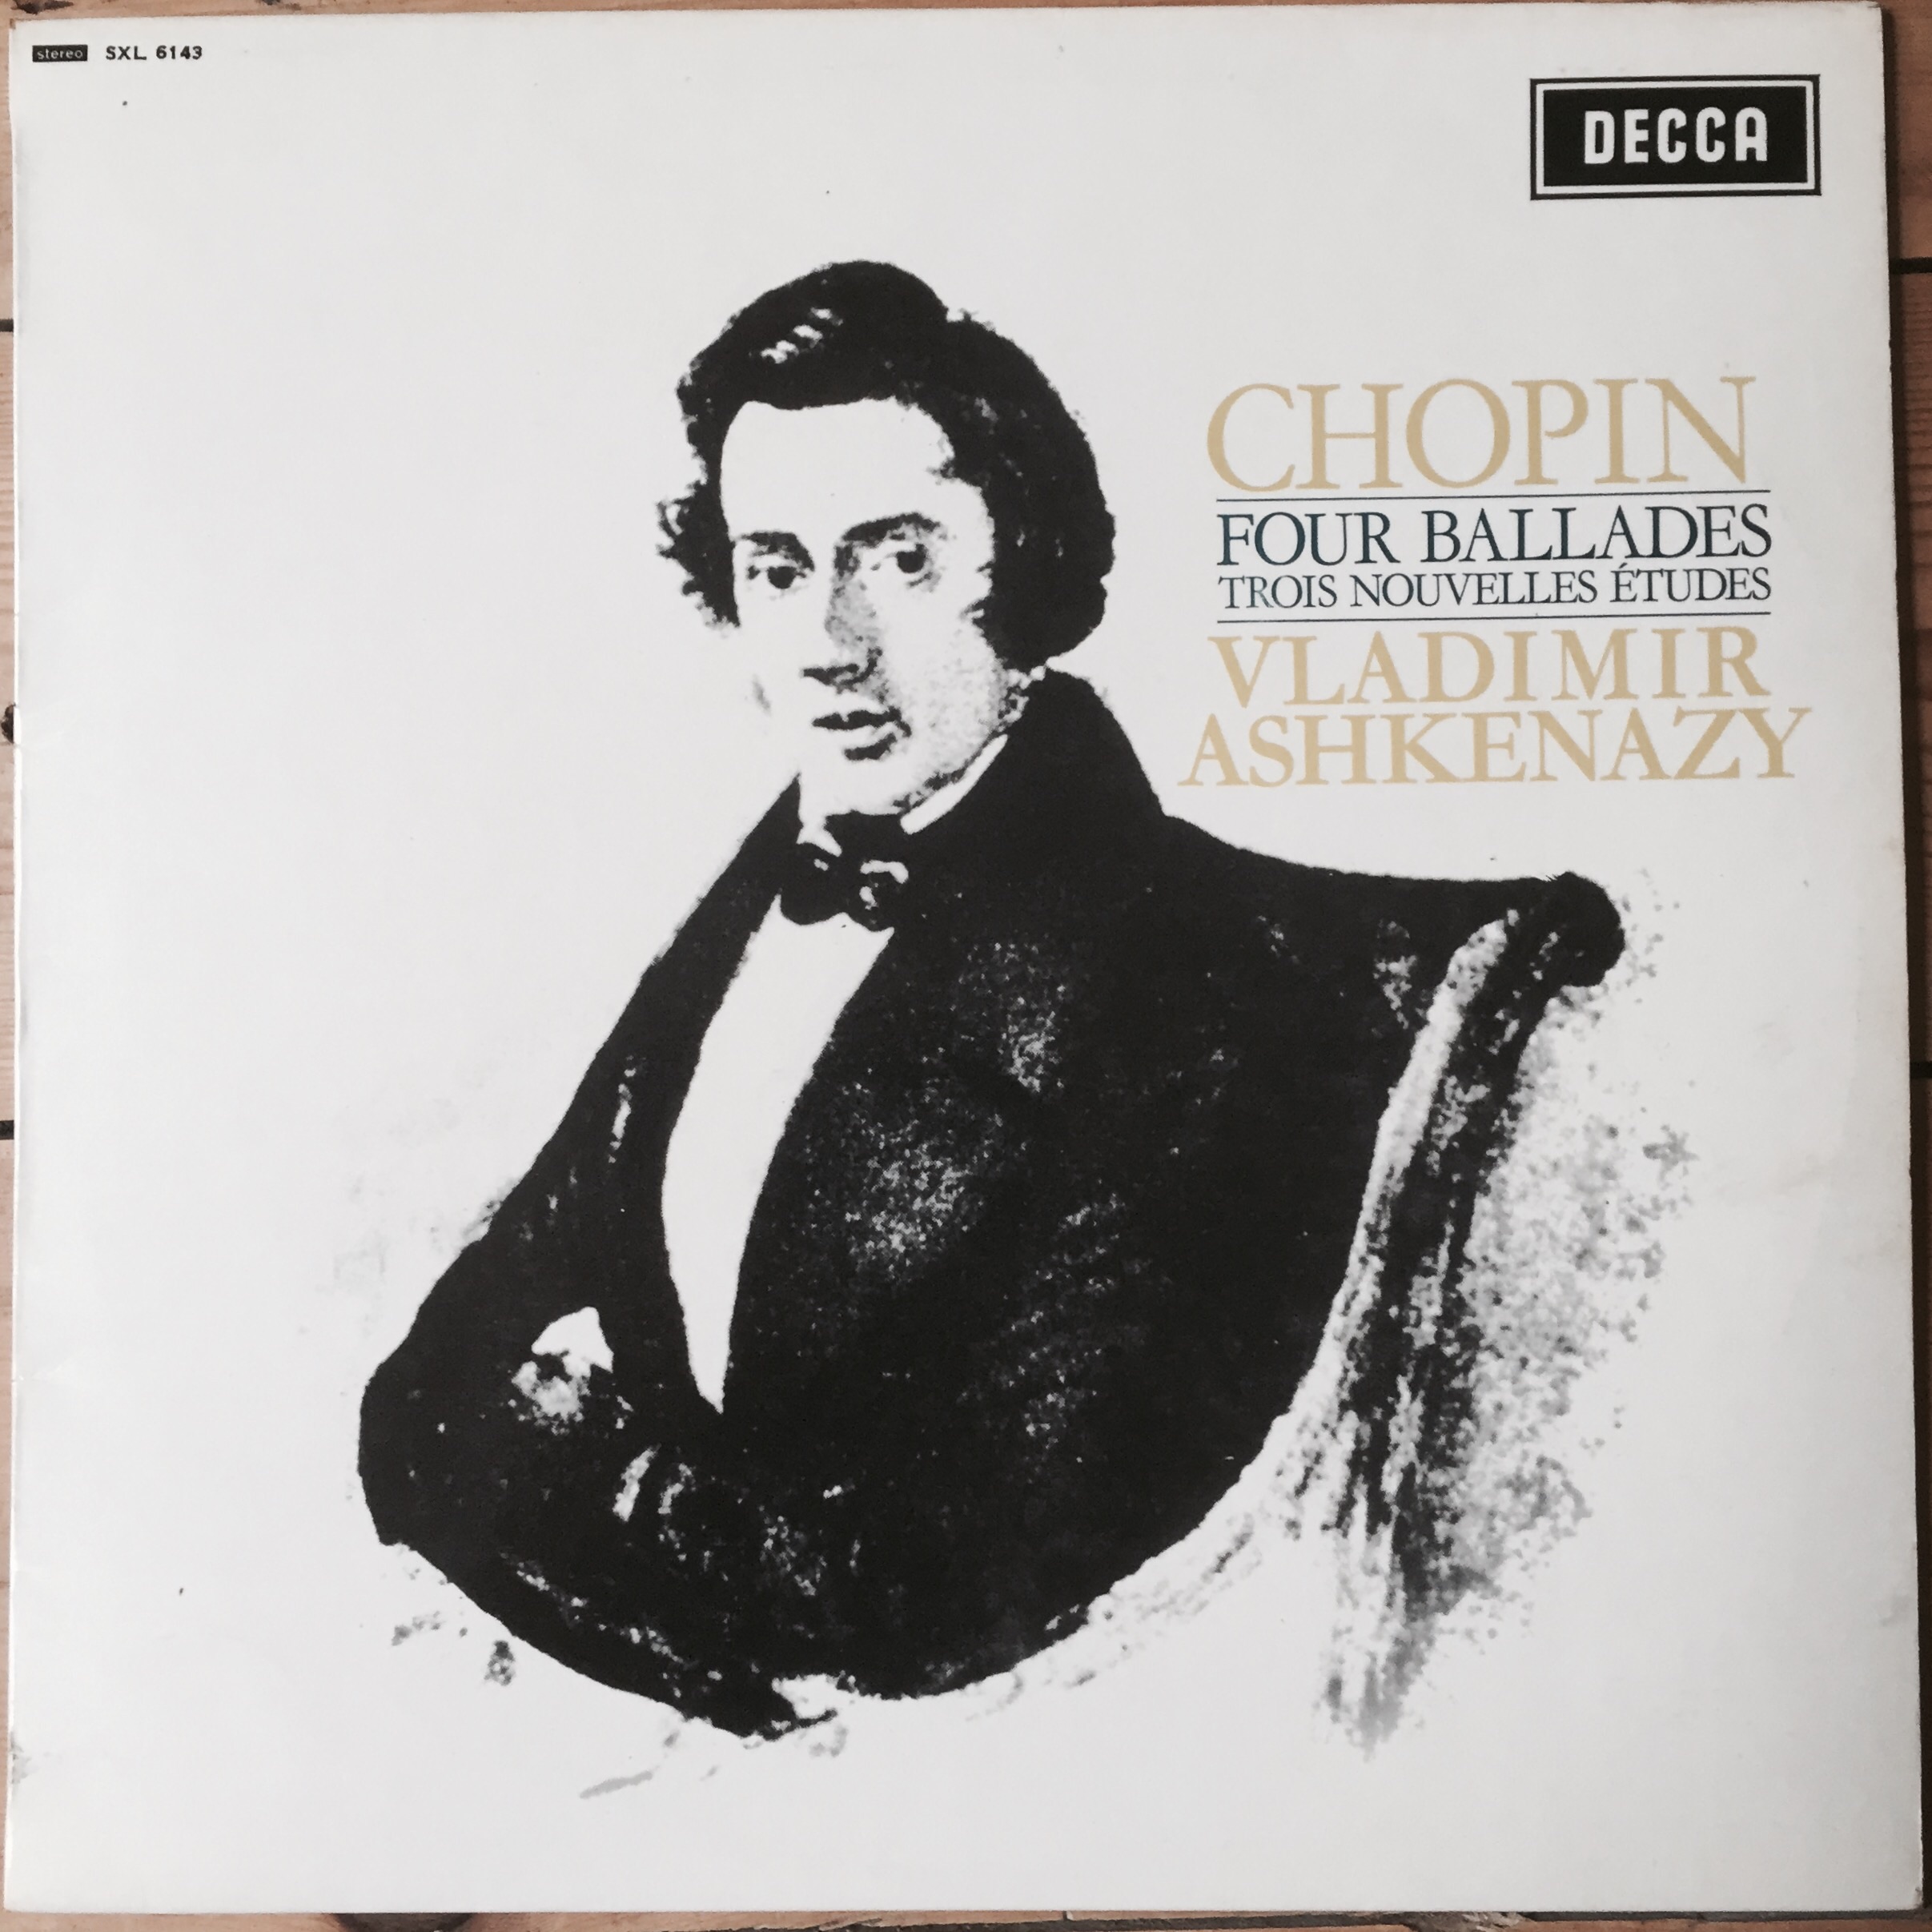 SXL 6143 Chopin Four Ballades, Trois Nouvelles Etudes / Vladimir Ashkenazy